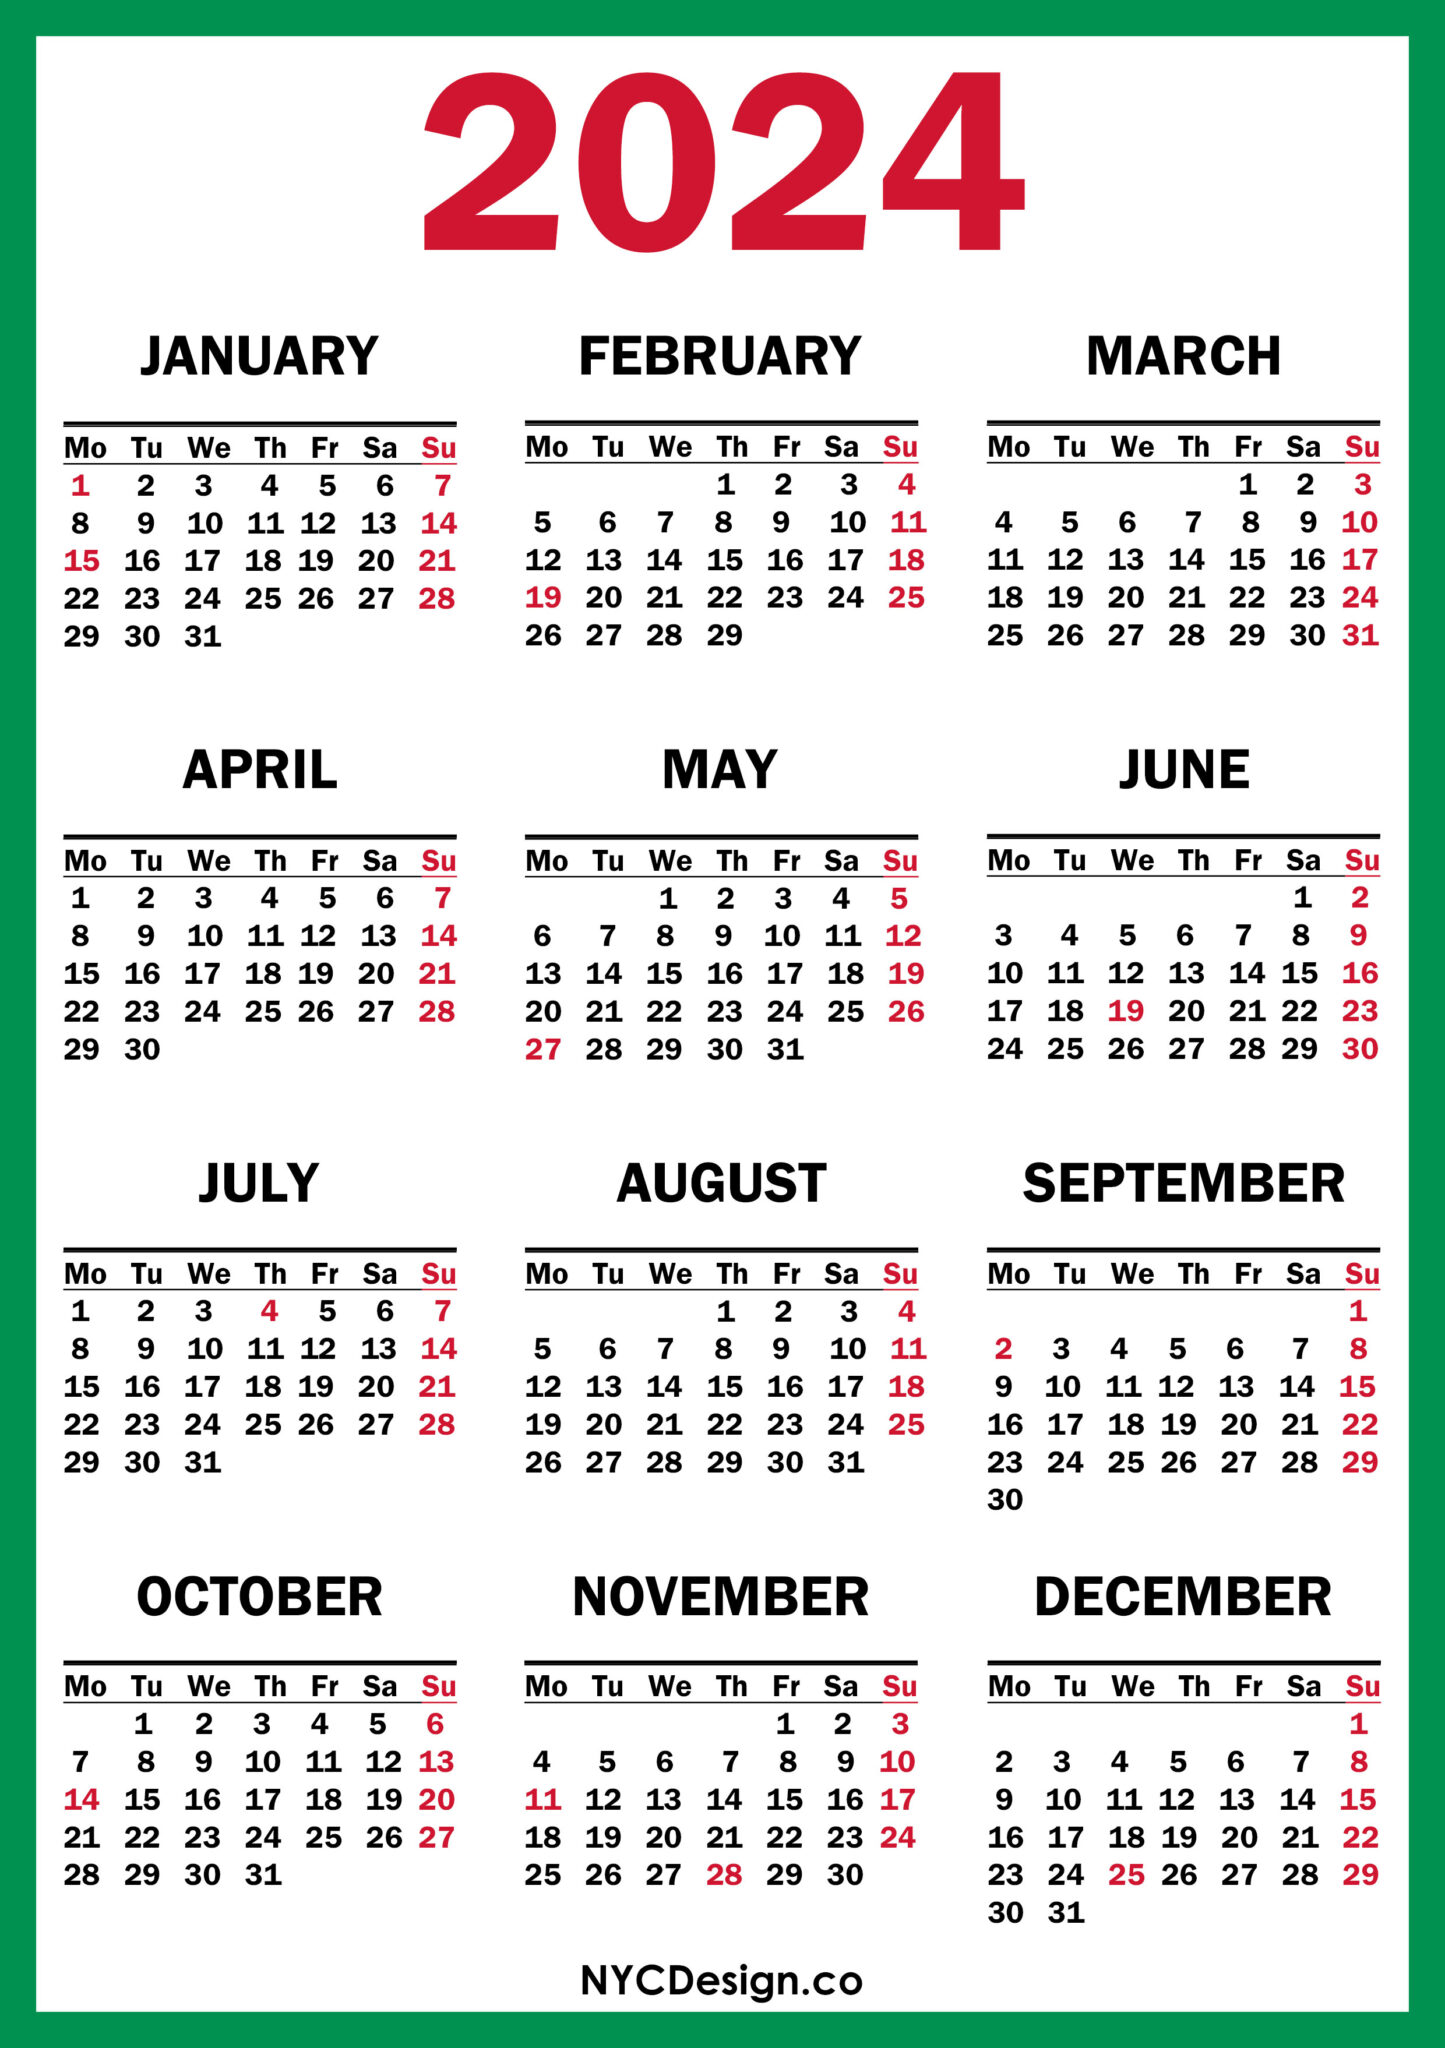 may-2024-calendar-free-printable-calendar